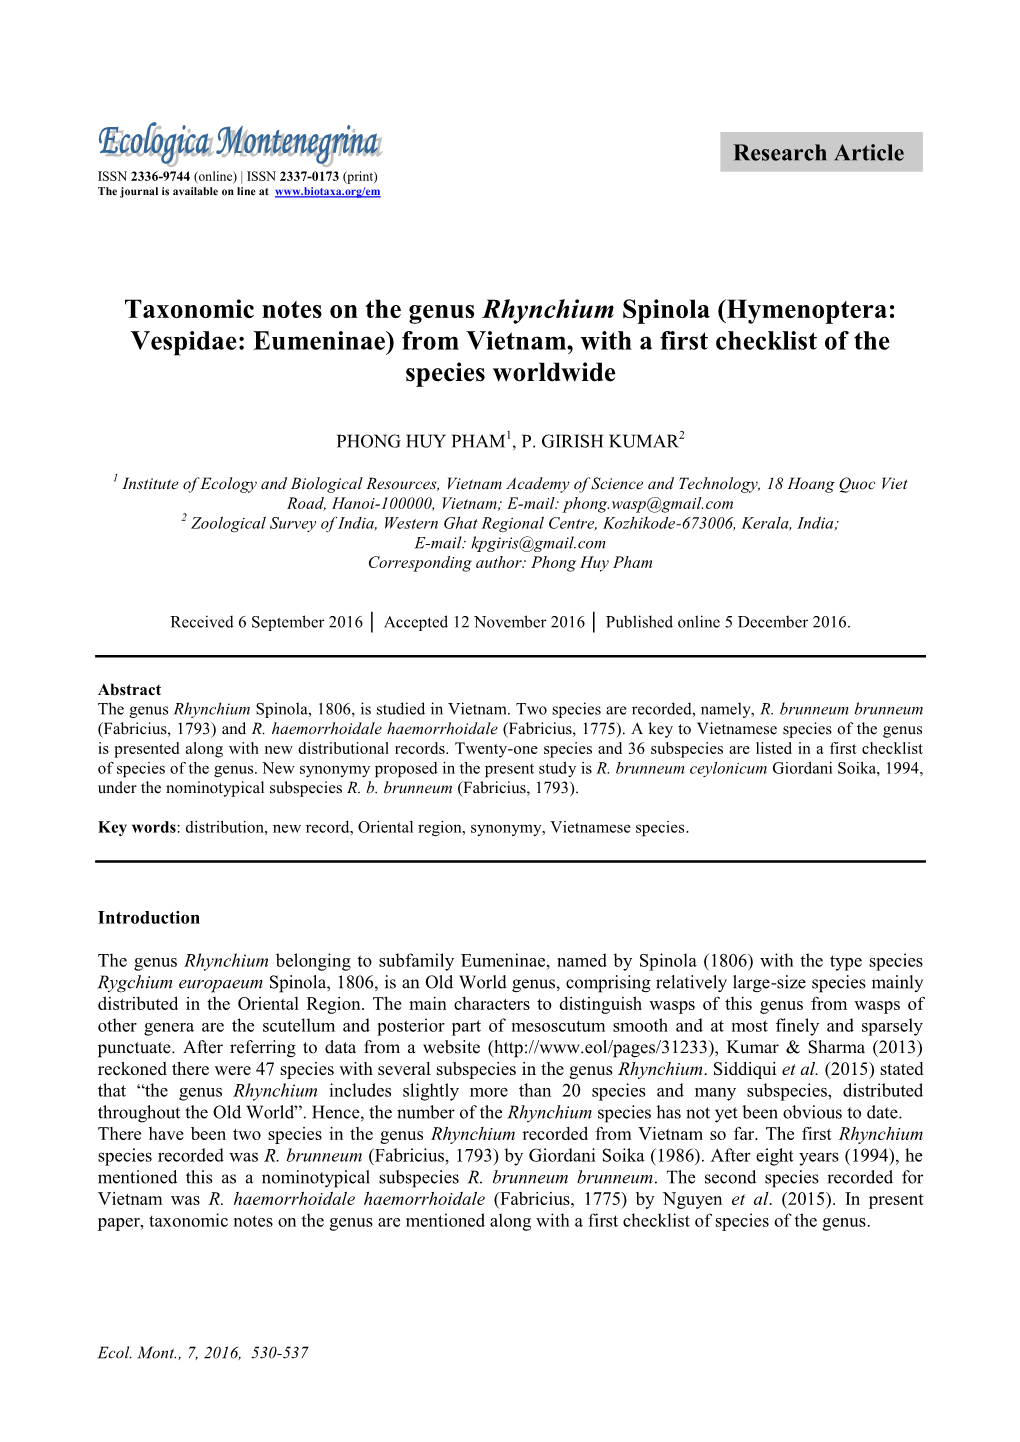 Taxonomic Notes on the Genus Rhynchium Spinola (Hymenoptera: Vespidae: Eumeninae) from Vietnam, with a First Checklist of the Species Worldwide